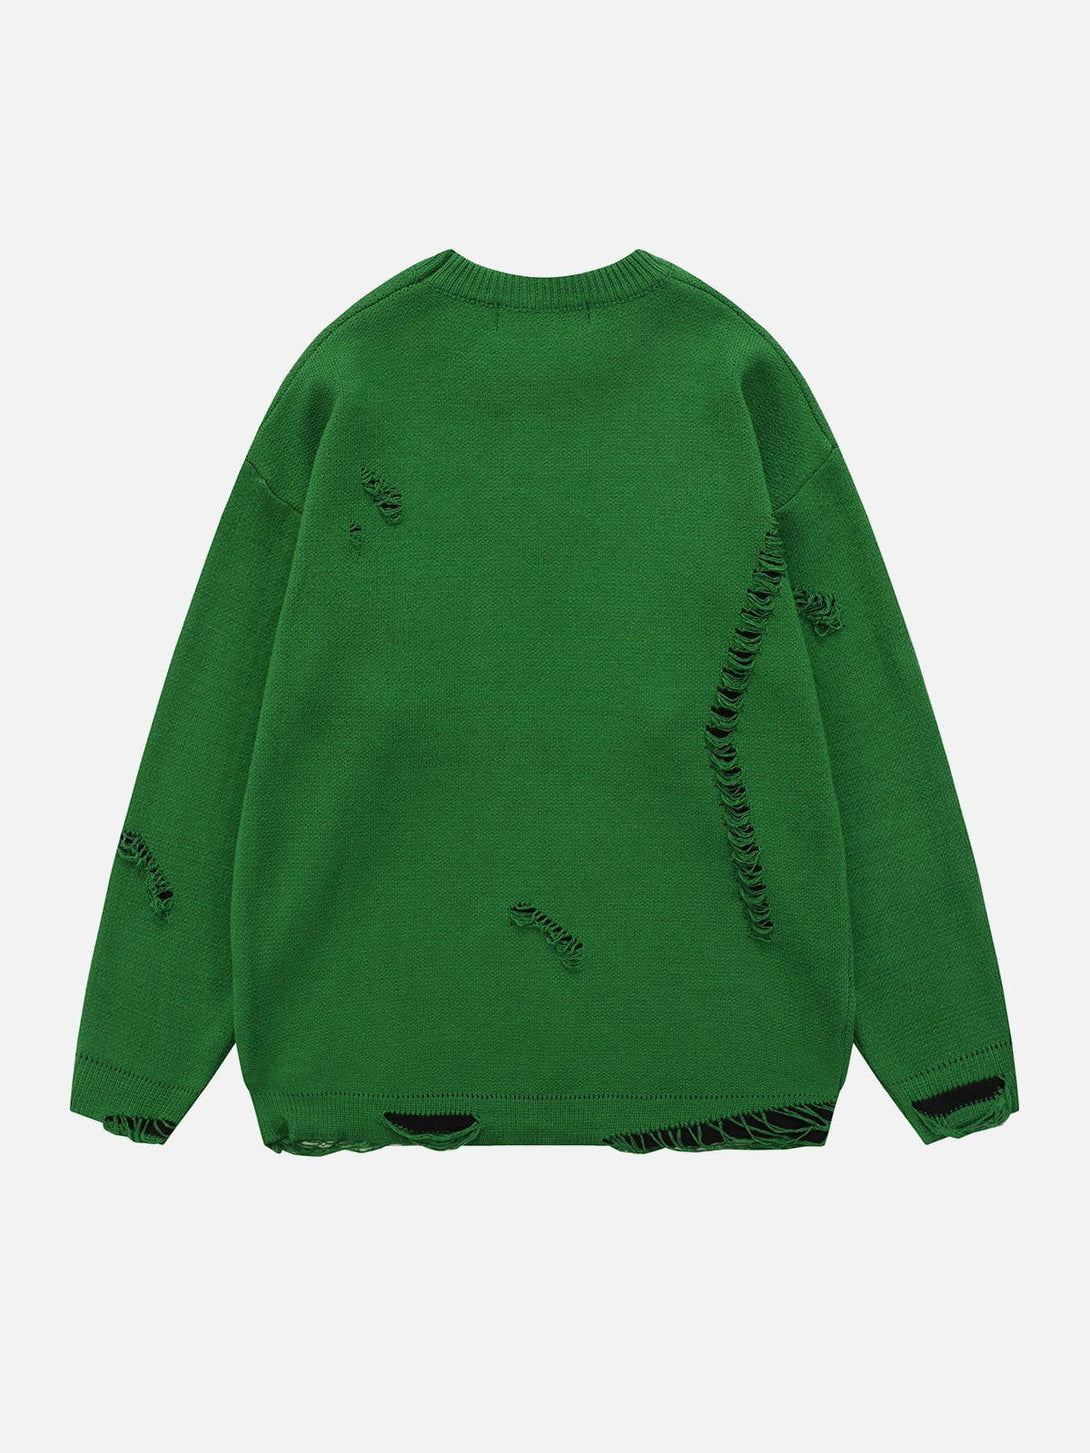 Levefly - Hole Fake Two Sweater - Streetwear Fashion - levefly.com